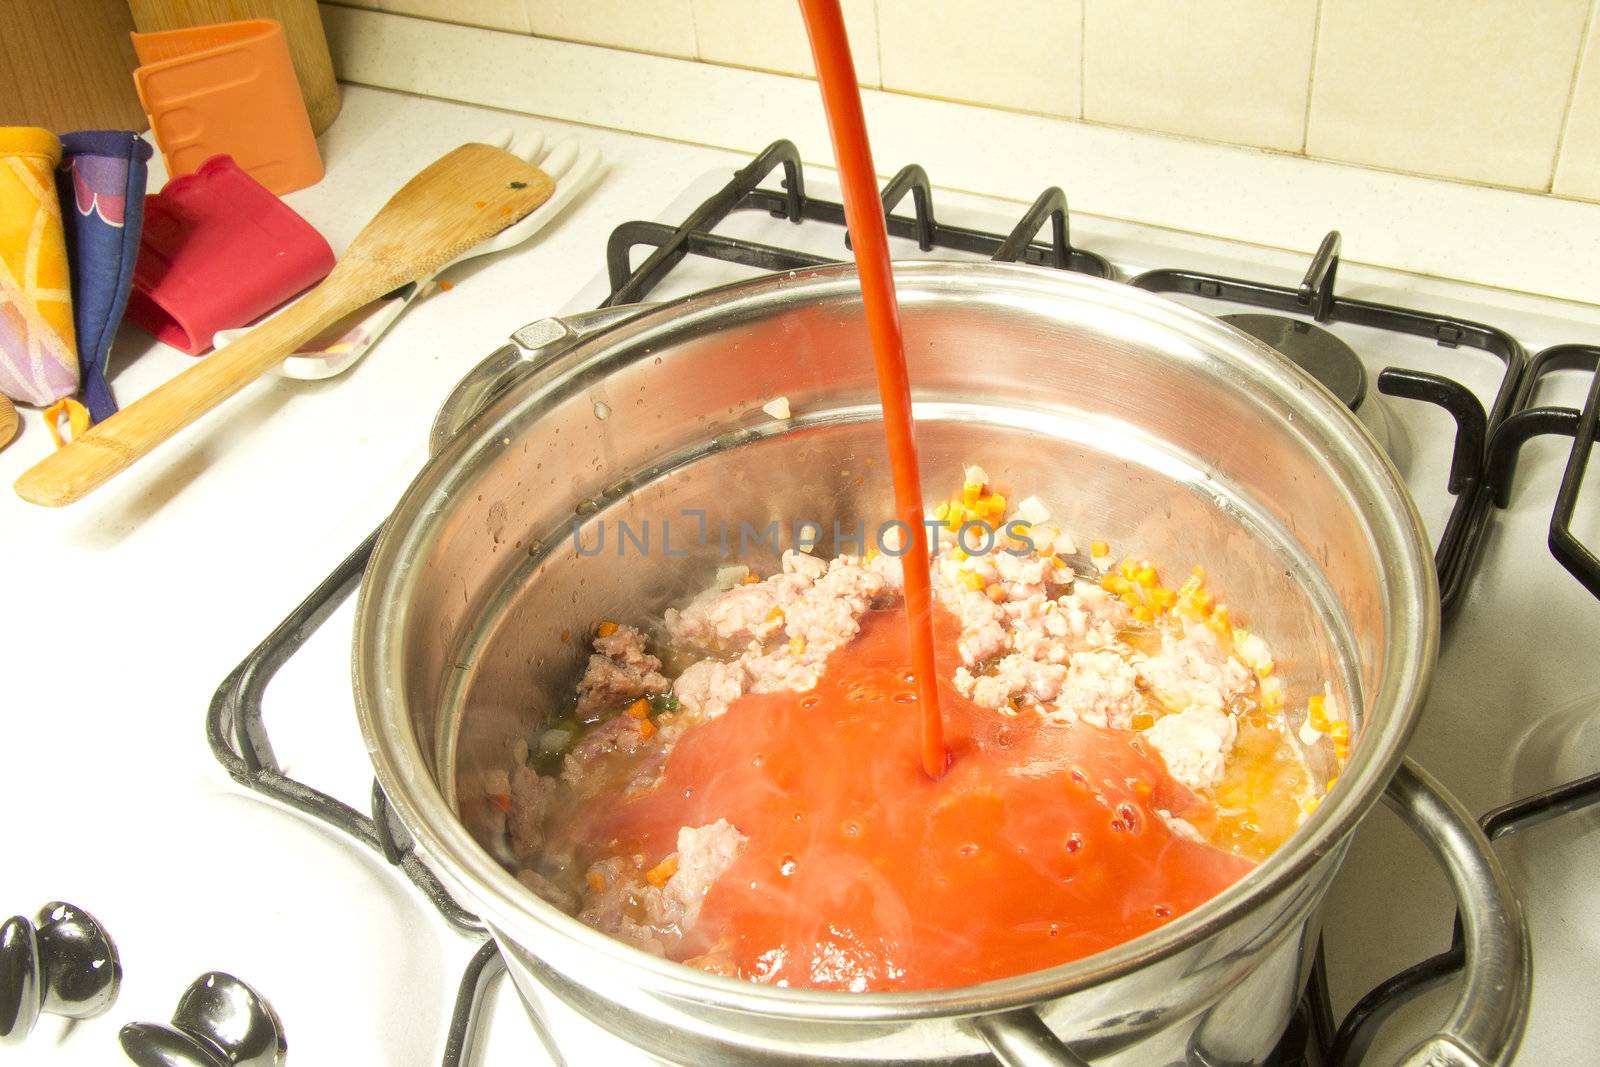 a cooking italian tomato sauce by danilobiancalana